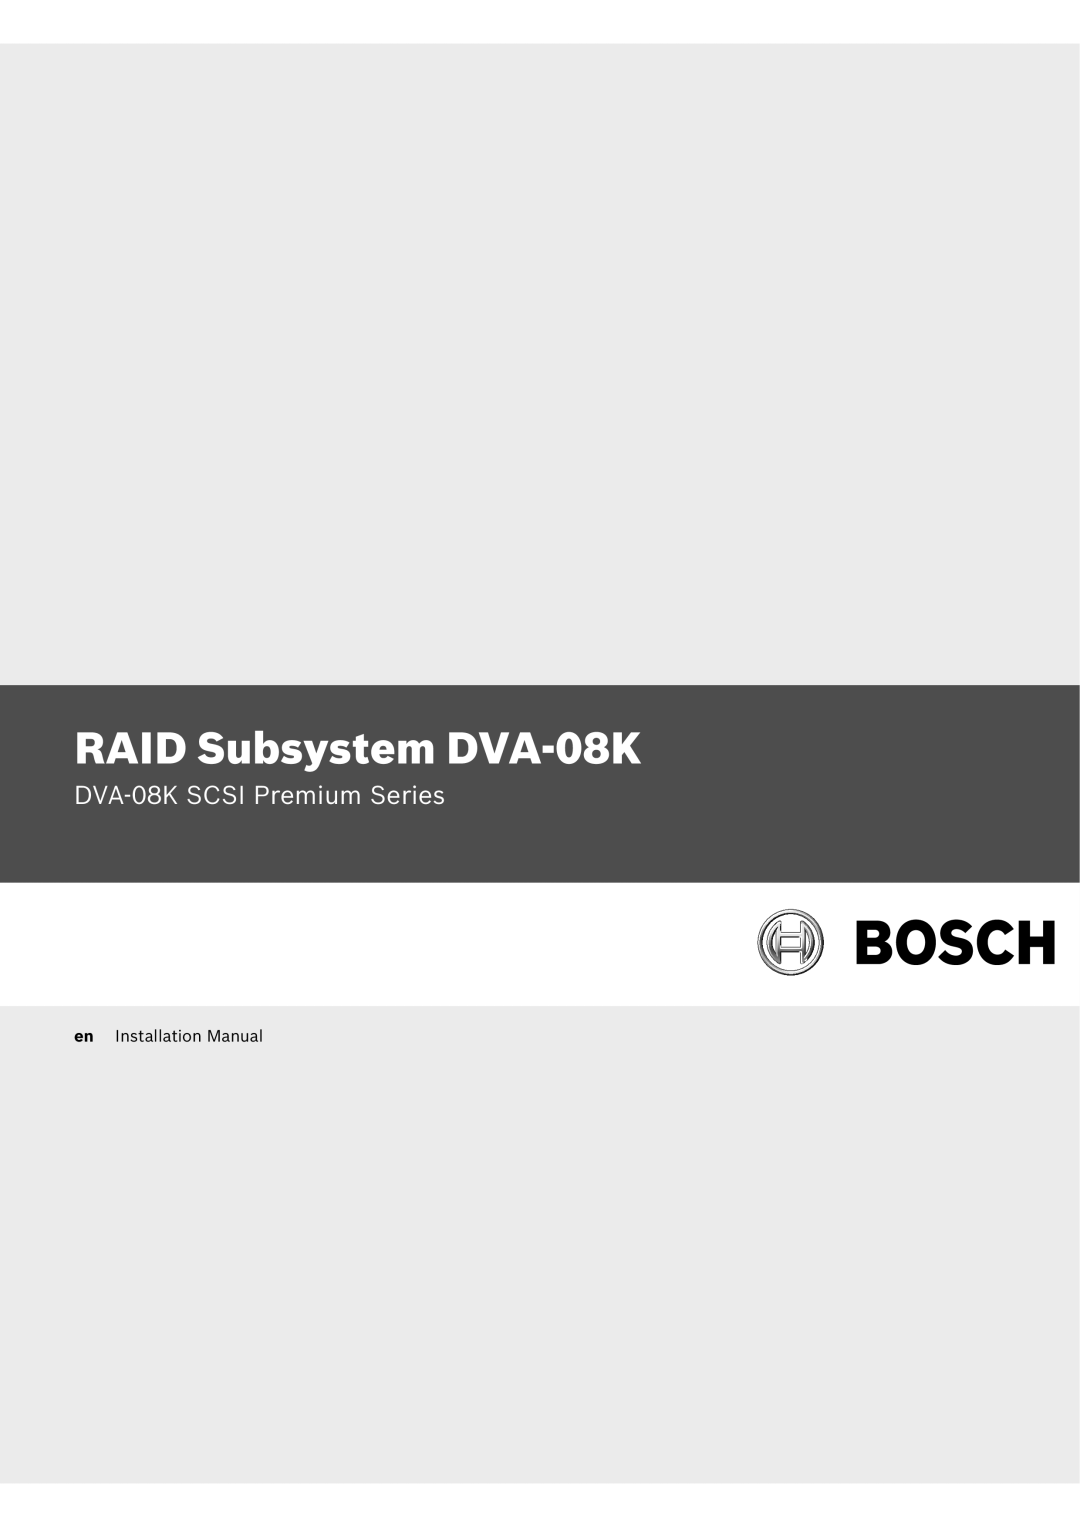 Bosch Appliances manual RAID Subsystem DVA-08K, DVA-08K SCSI Premium Series 